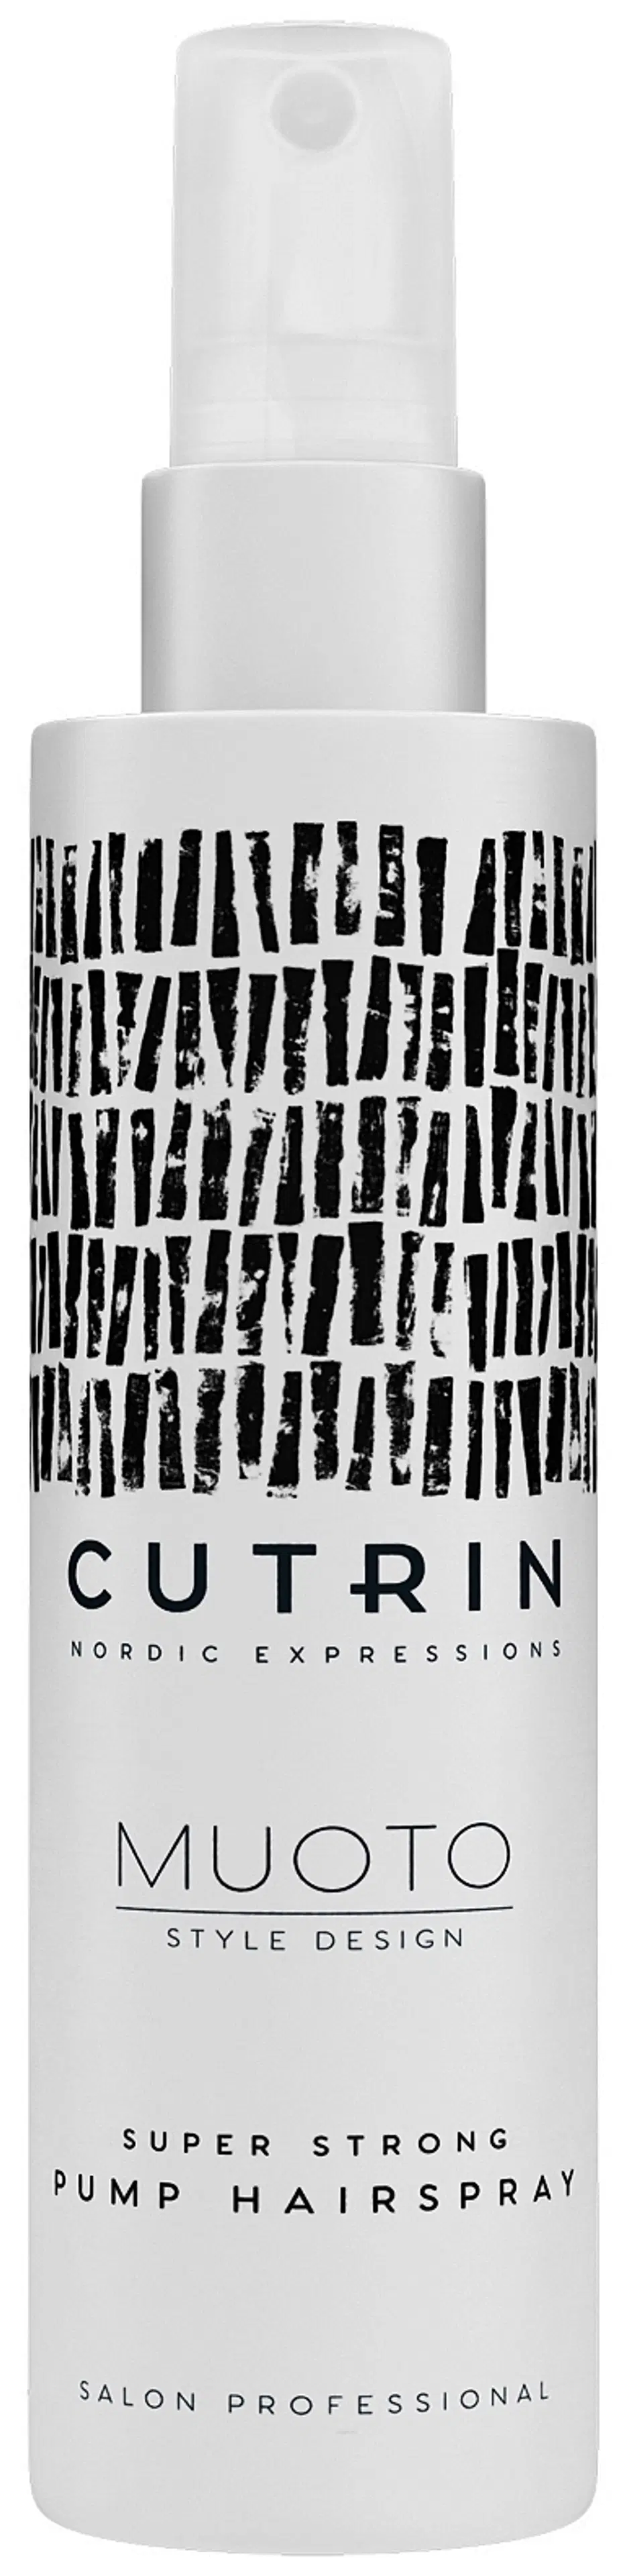 Cutrin Muoto Extra Strong Pump Hairspray pumppukiinne 200 ml